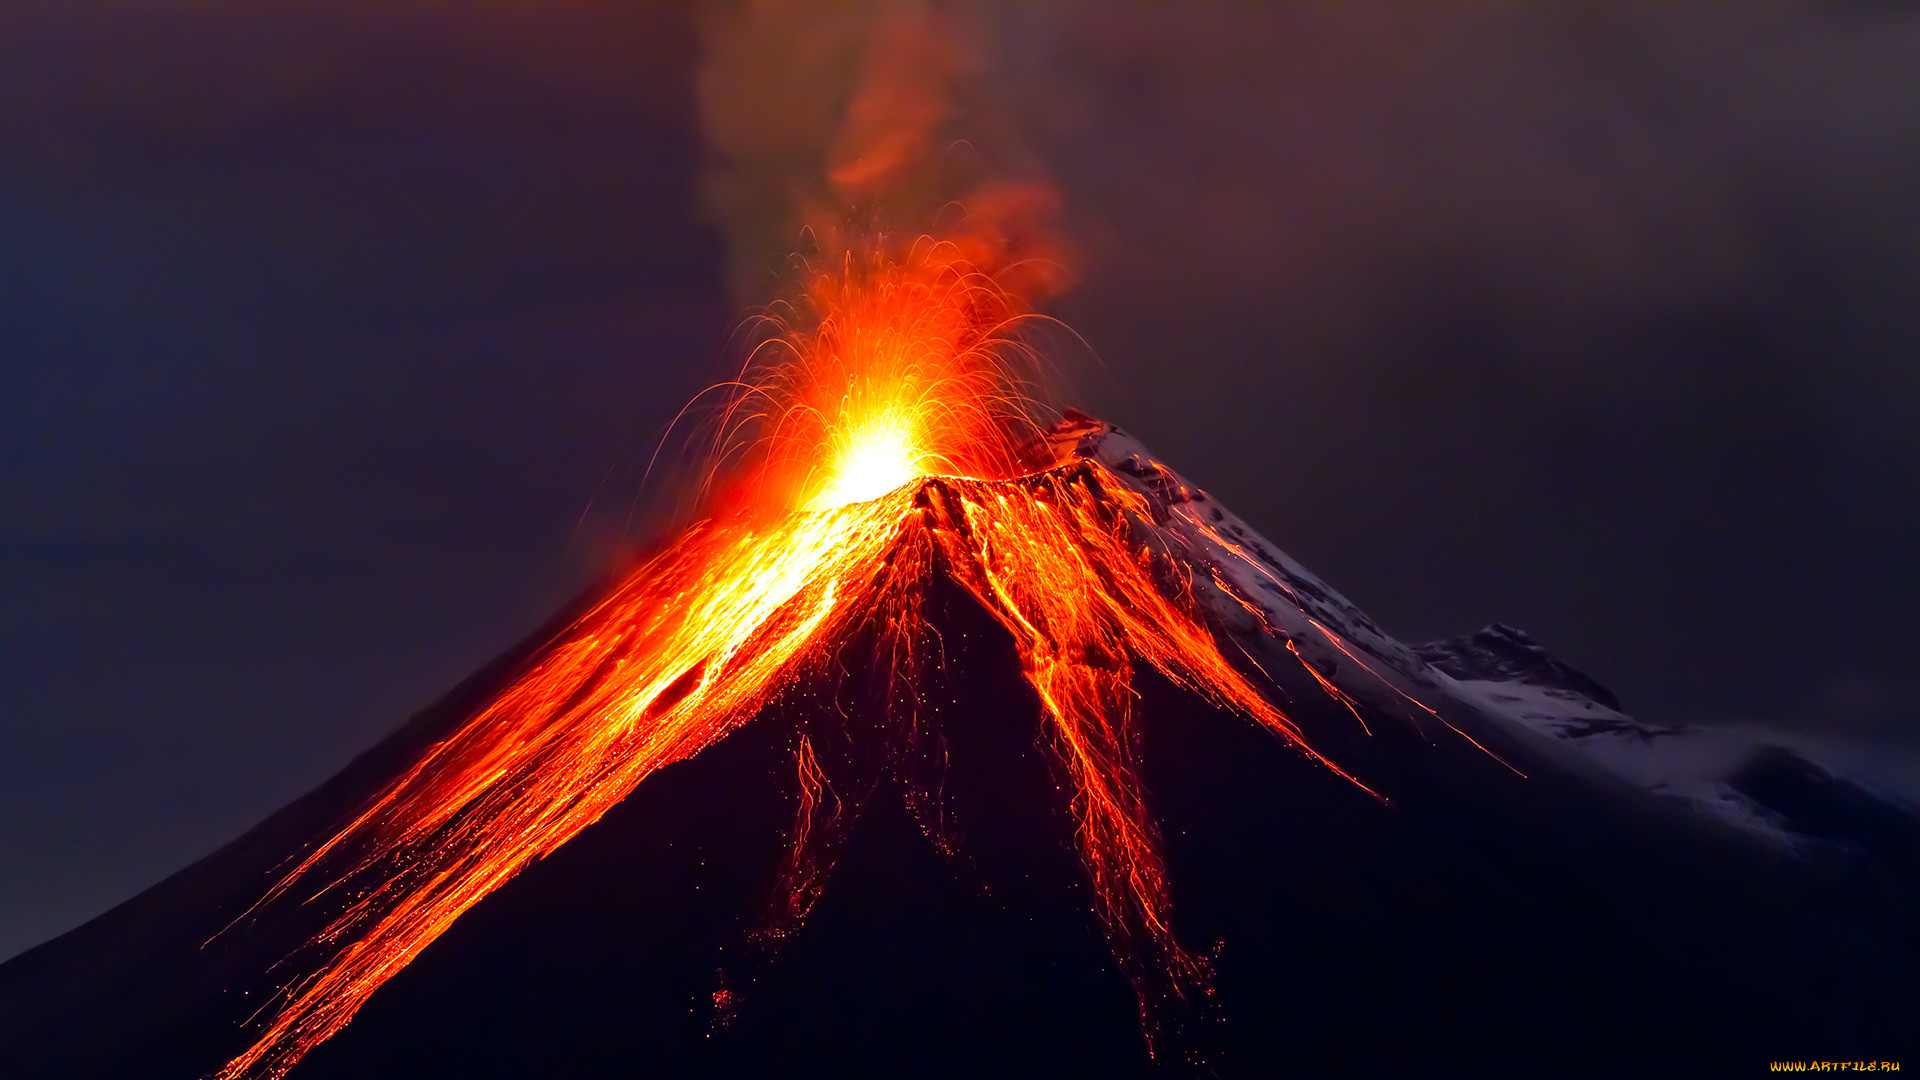 , , lava, , eruption, fantastic, volcano, , , sky, landsape, mountains